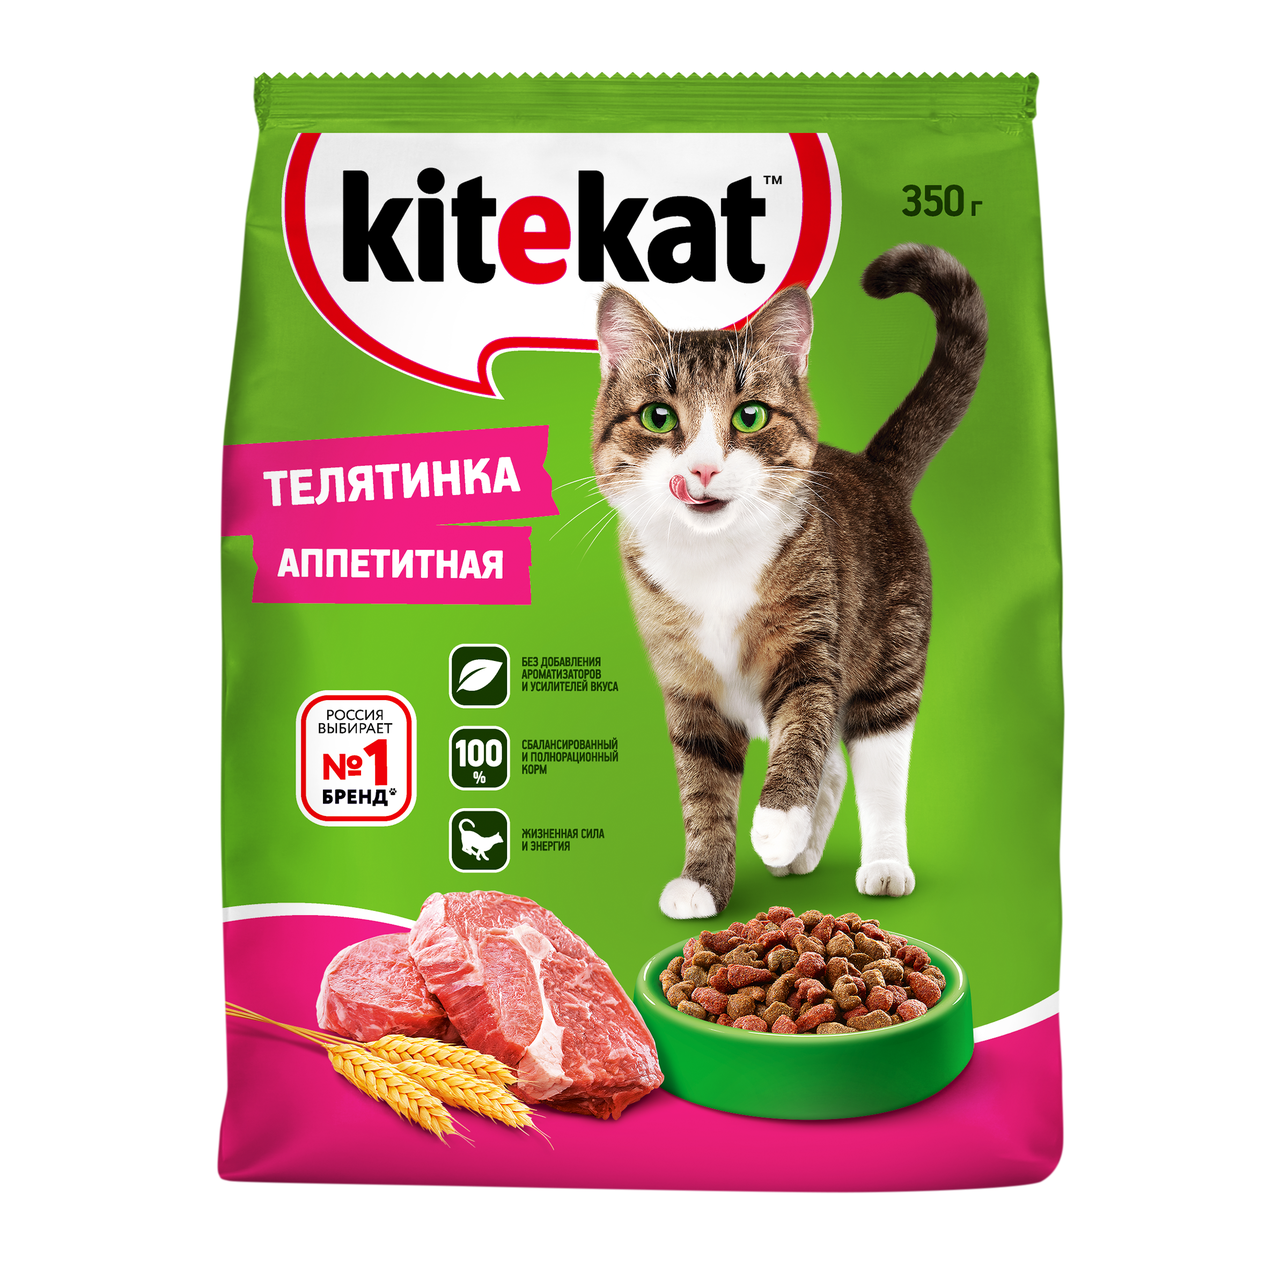 Kitekat (Китекет) Сухой корм для кошек Телятинка аппетитная 350 гр